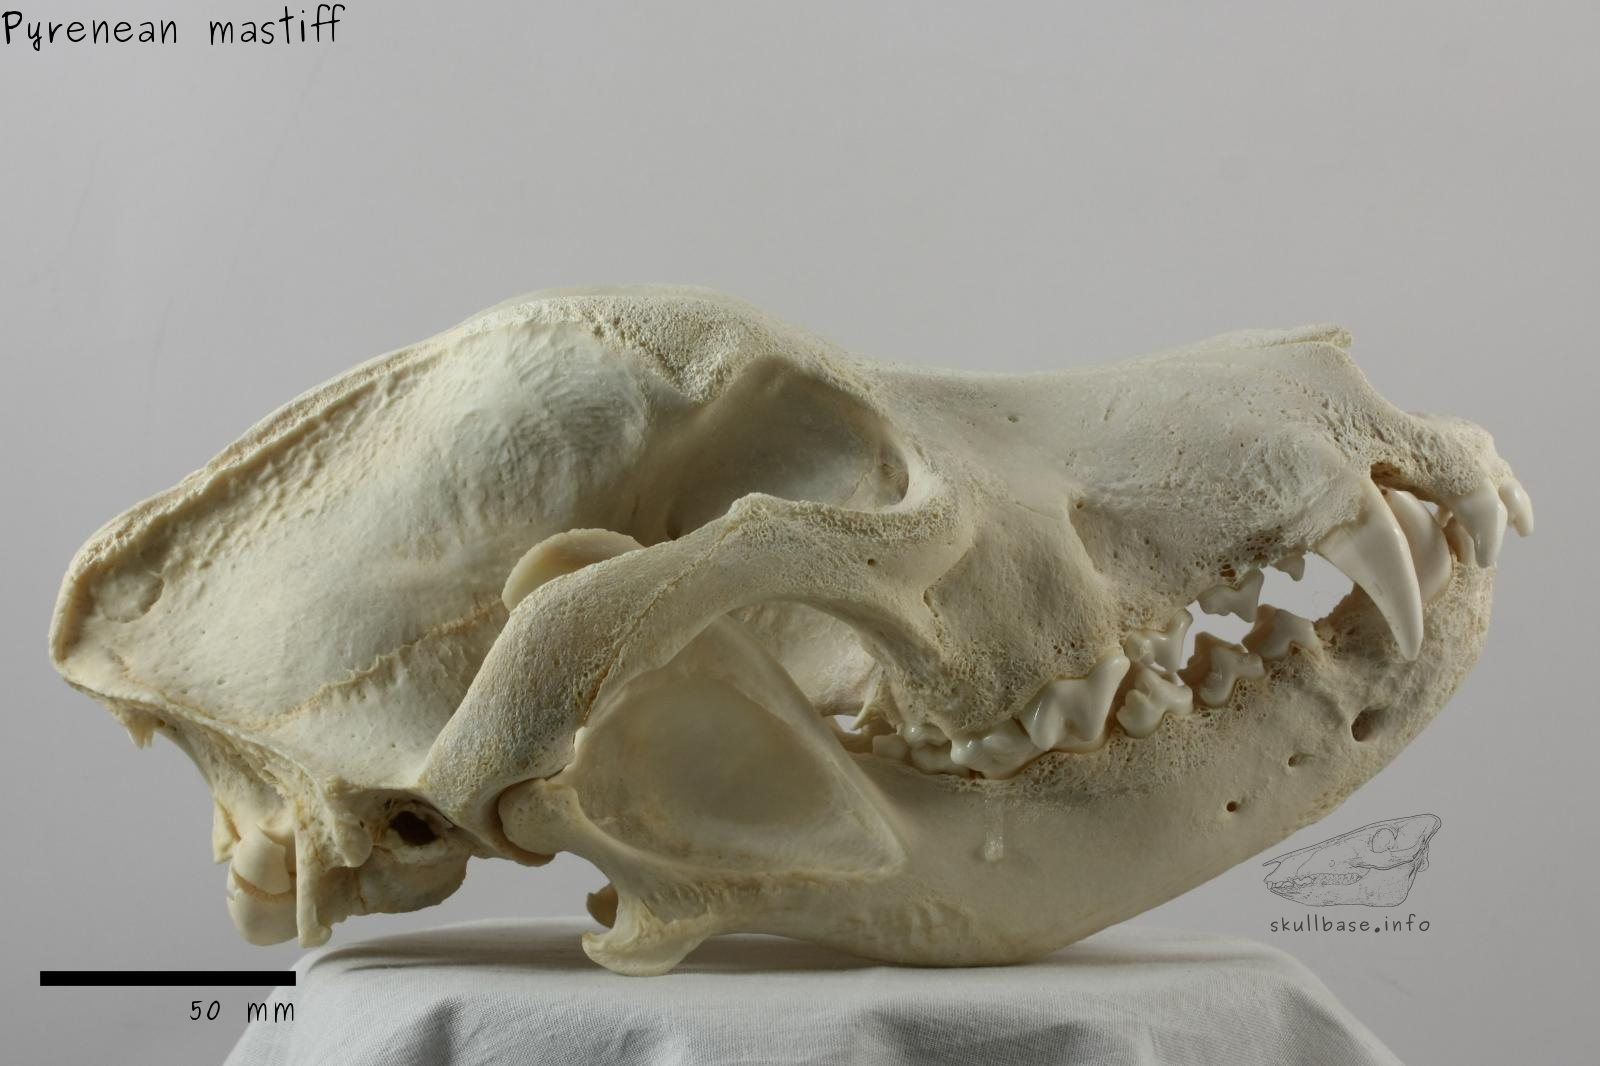 Pyrenean mastiff (Canis lupus familiaris) skull lateral view